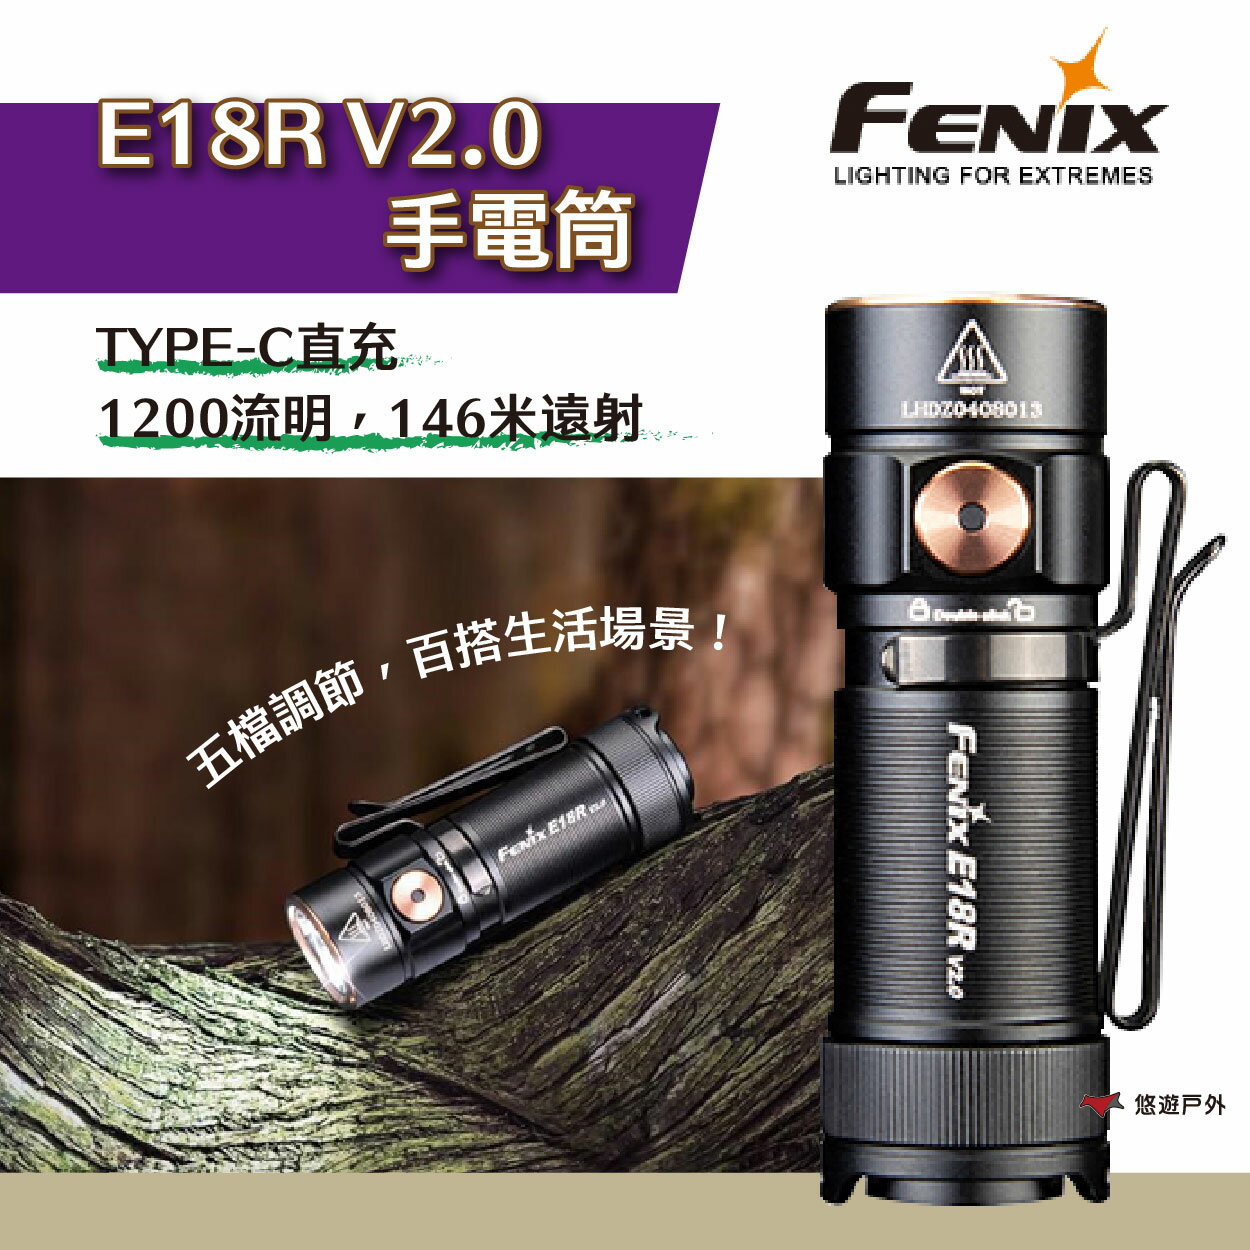 【Fenix】E18R V2.0 手電筒 輕量 便攜 TYPE-C充電 防誤按 登山 防災 緊急照明 露營 悠遊戶外